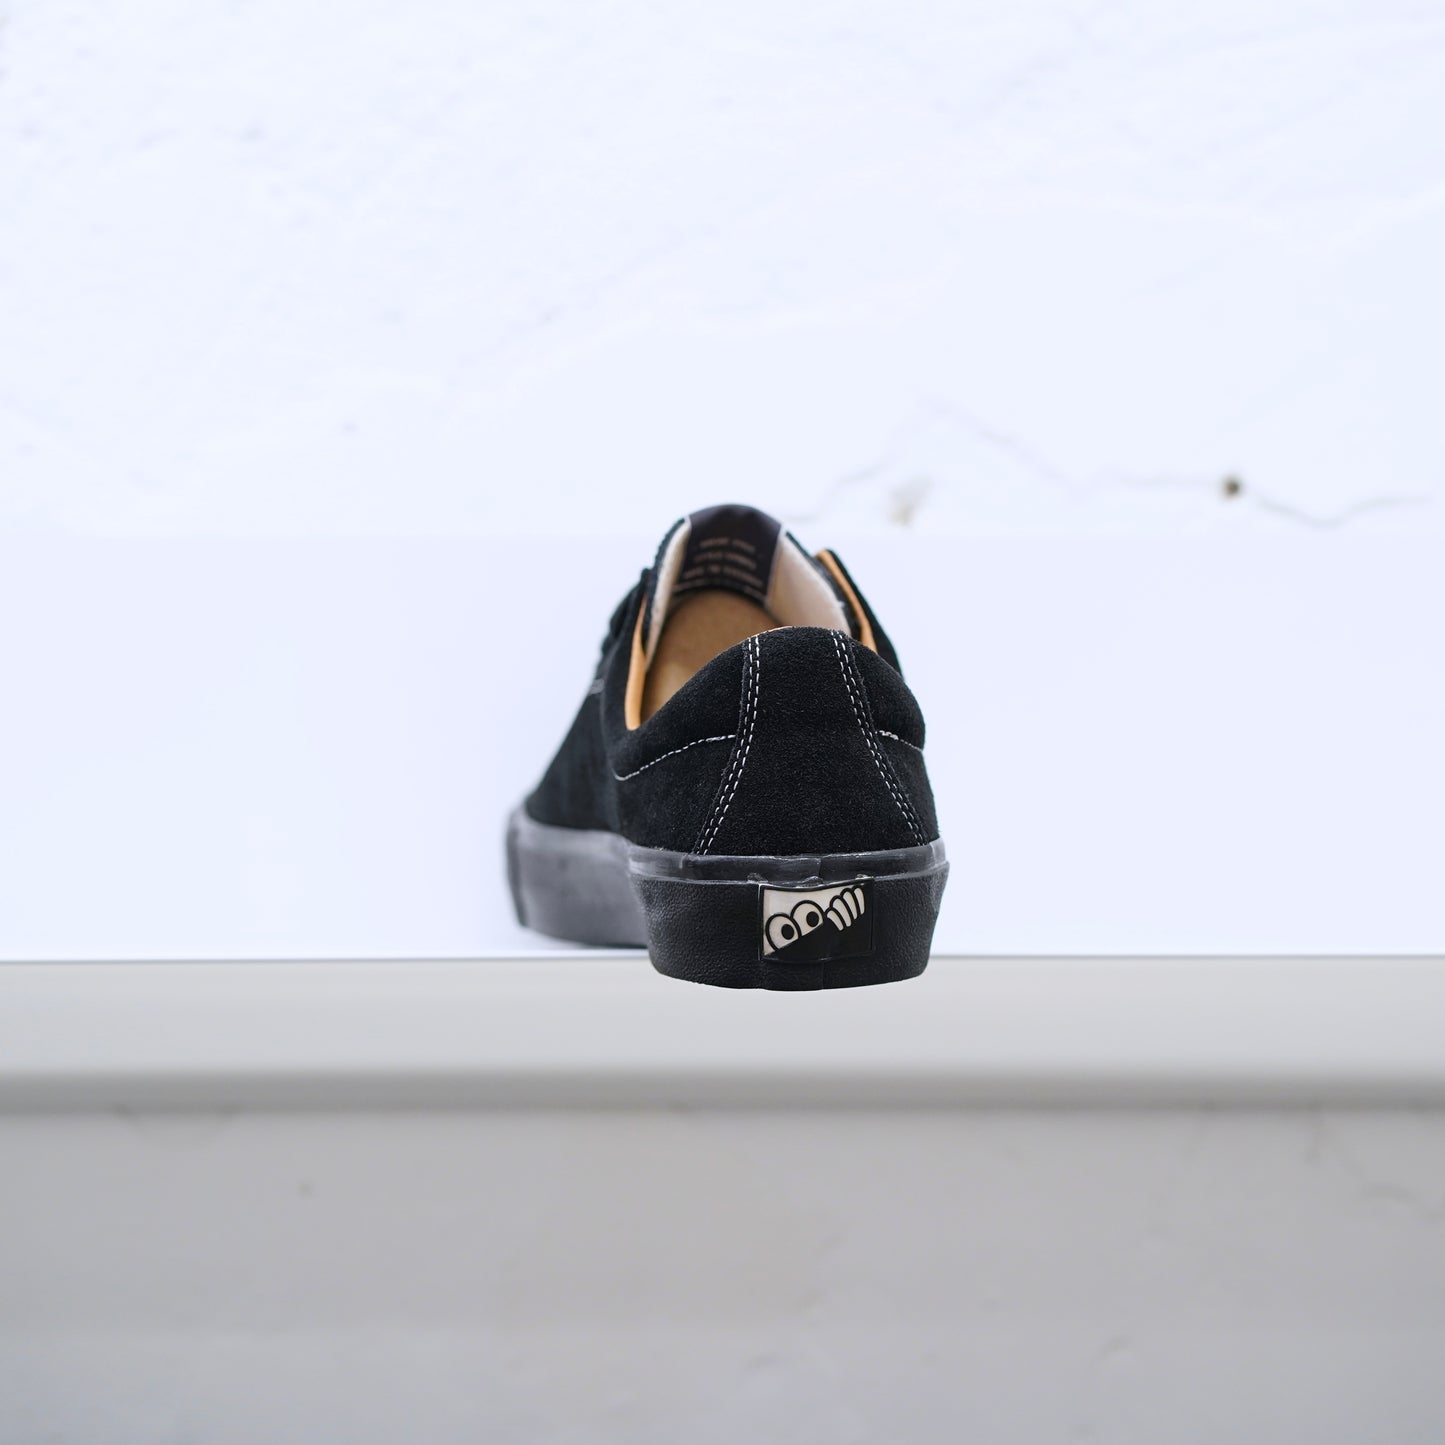 Last Resort AB - VM003 Shoes - Black/Black/White